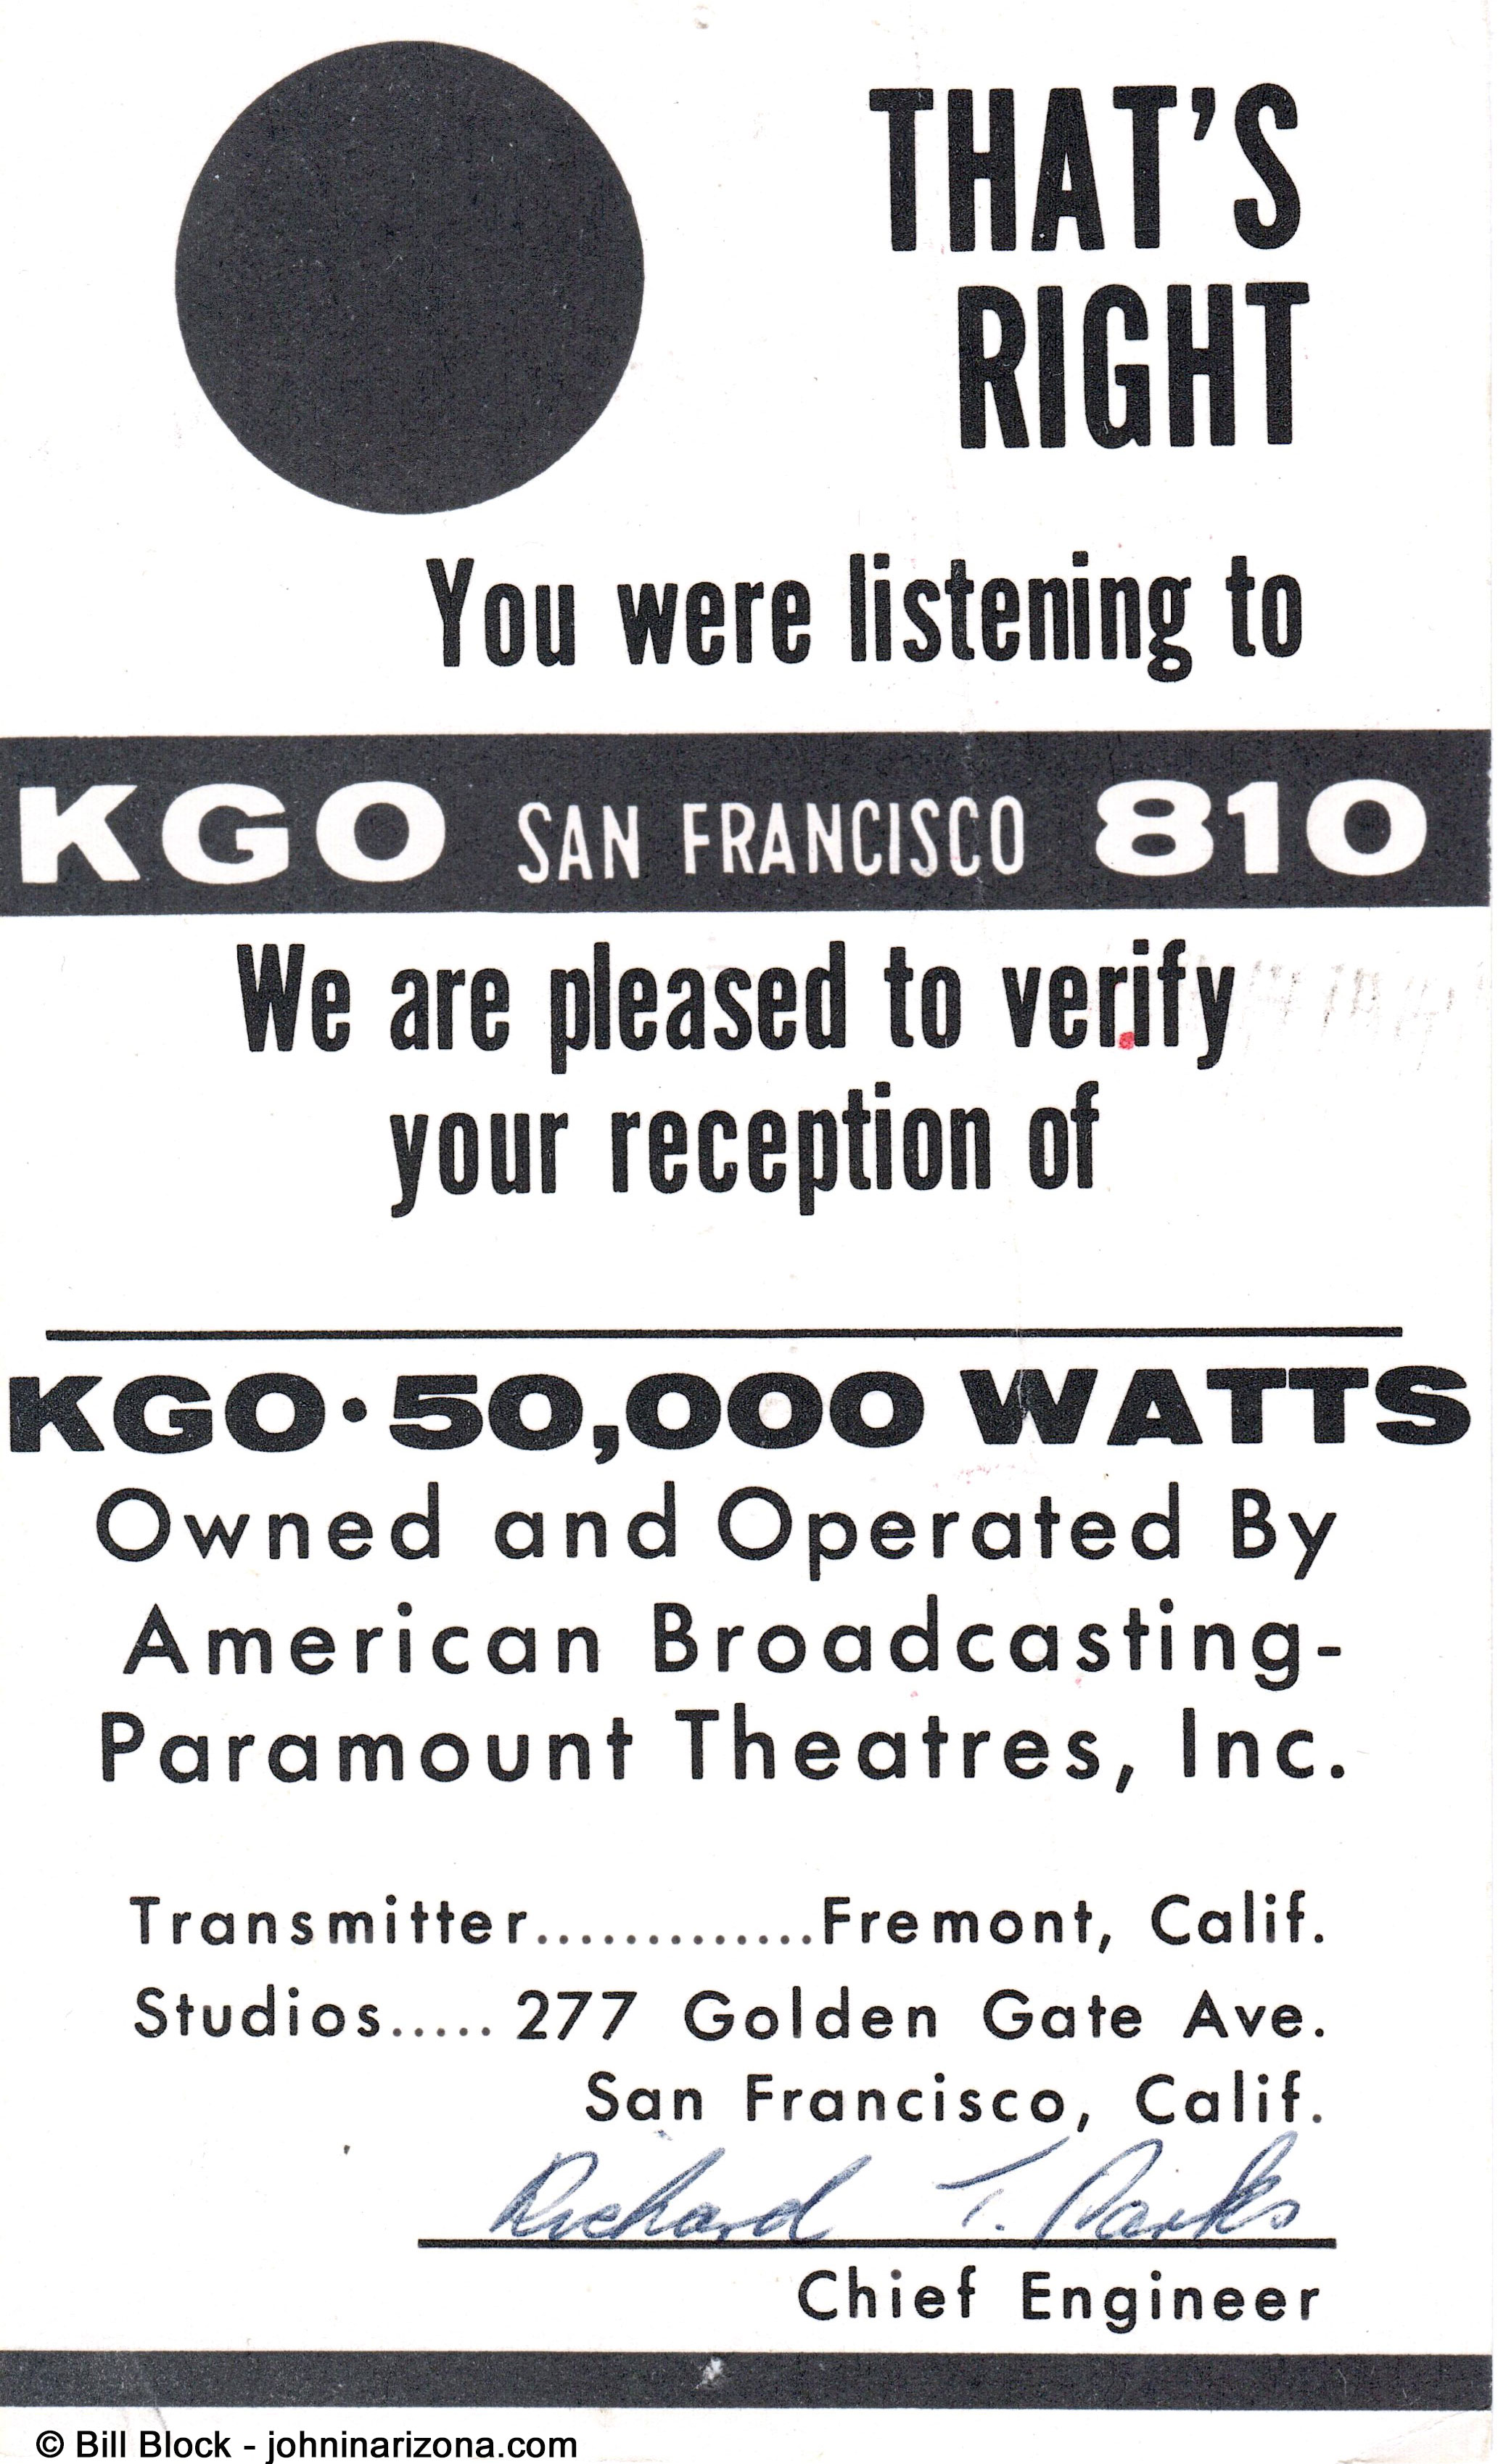 KGO Radio 810 San Francisco, California